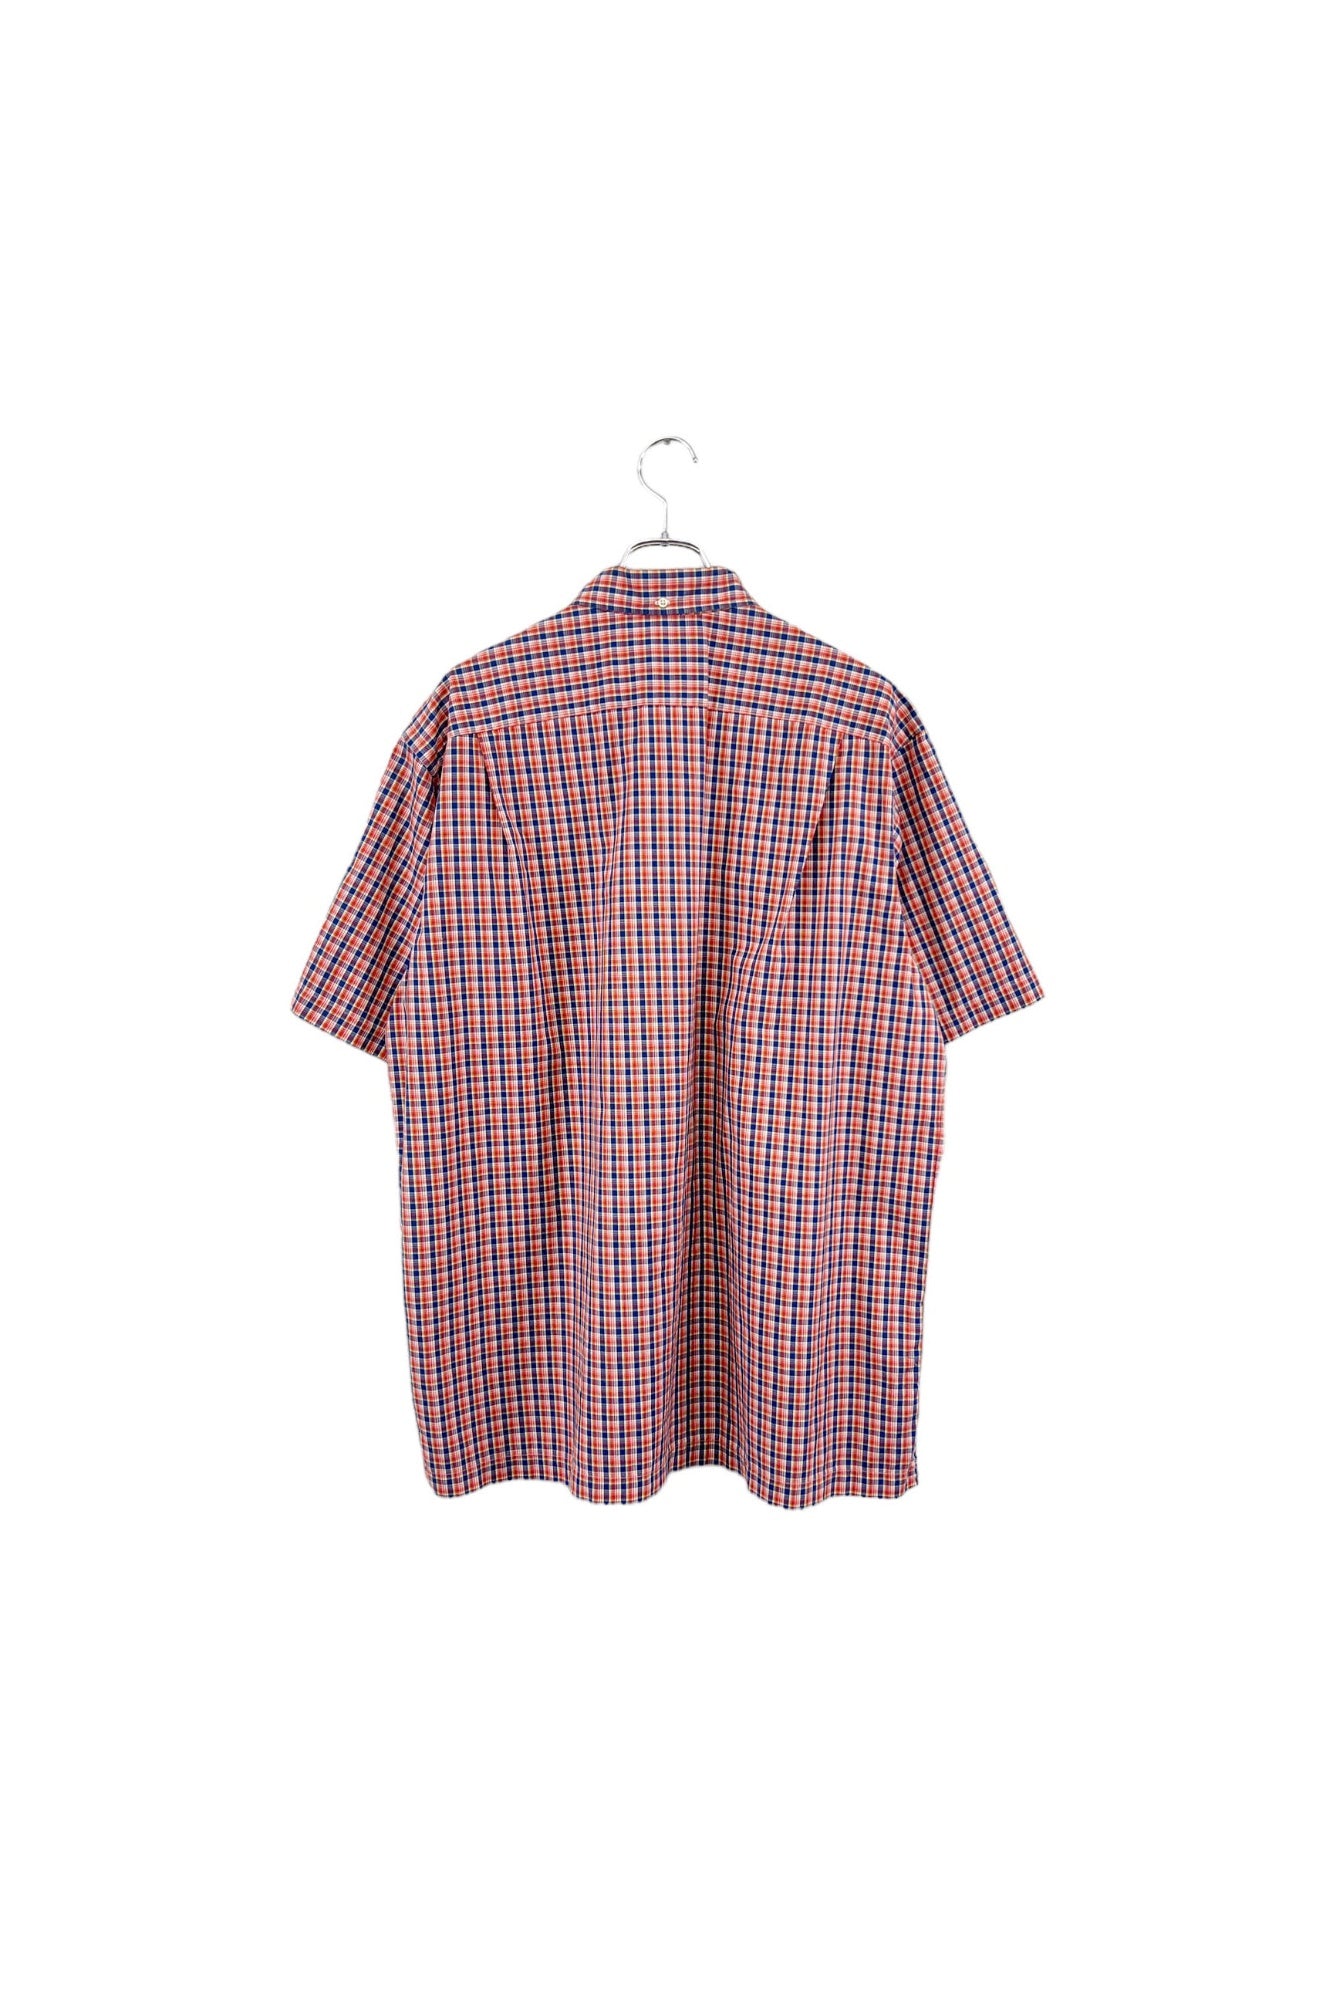 90 年代 Ralph Lauren ANDY CAMP 格纹衬衫